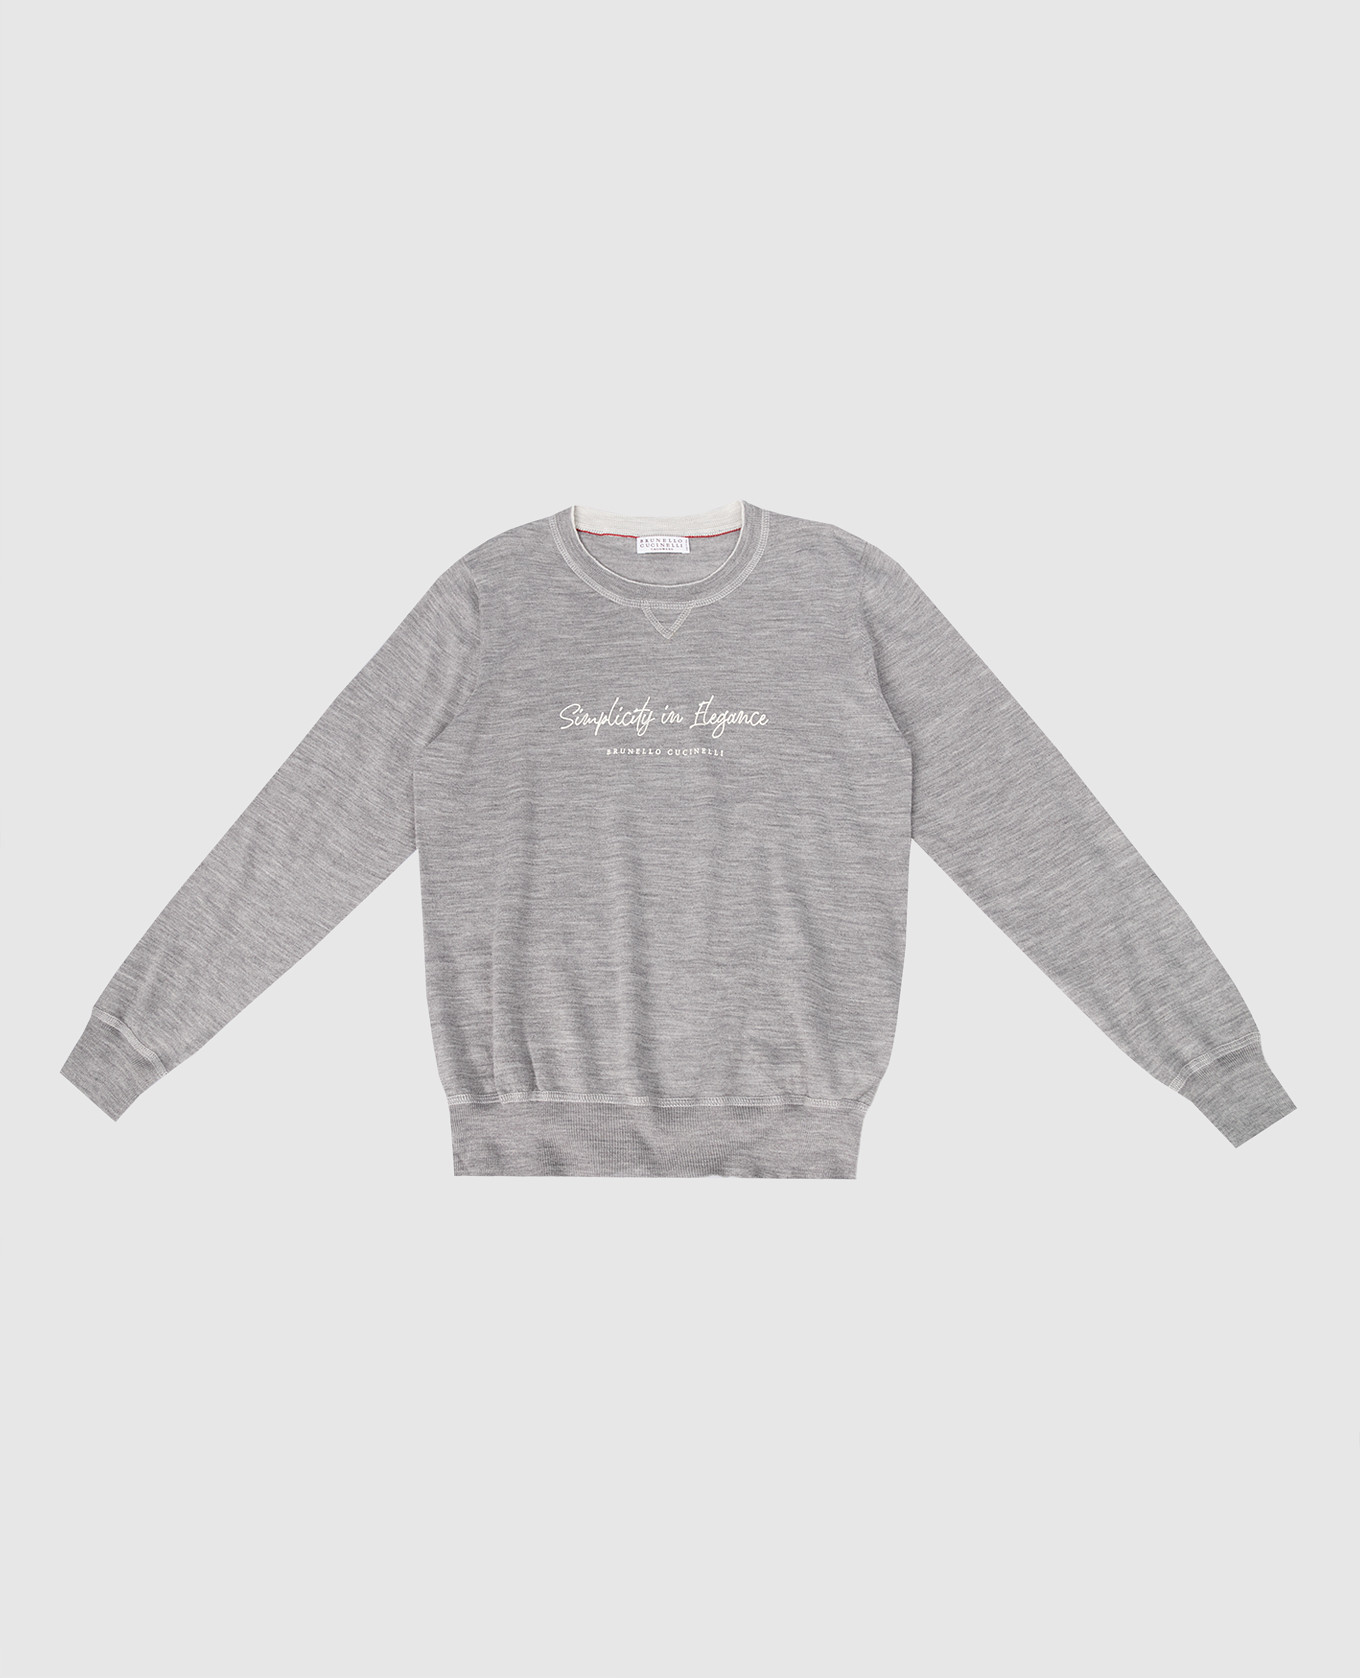 Children's gray wool and cashmere sweatshirt